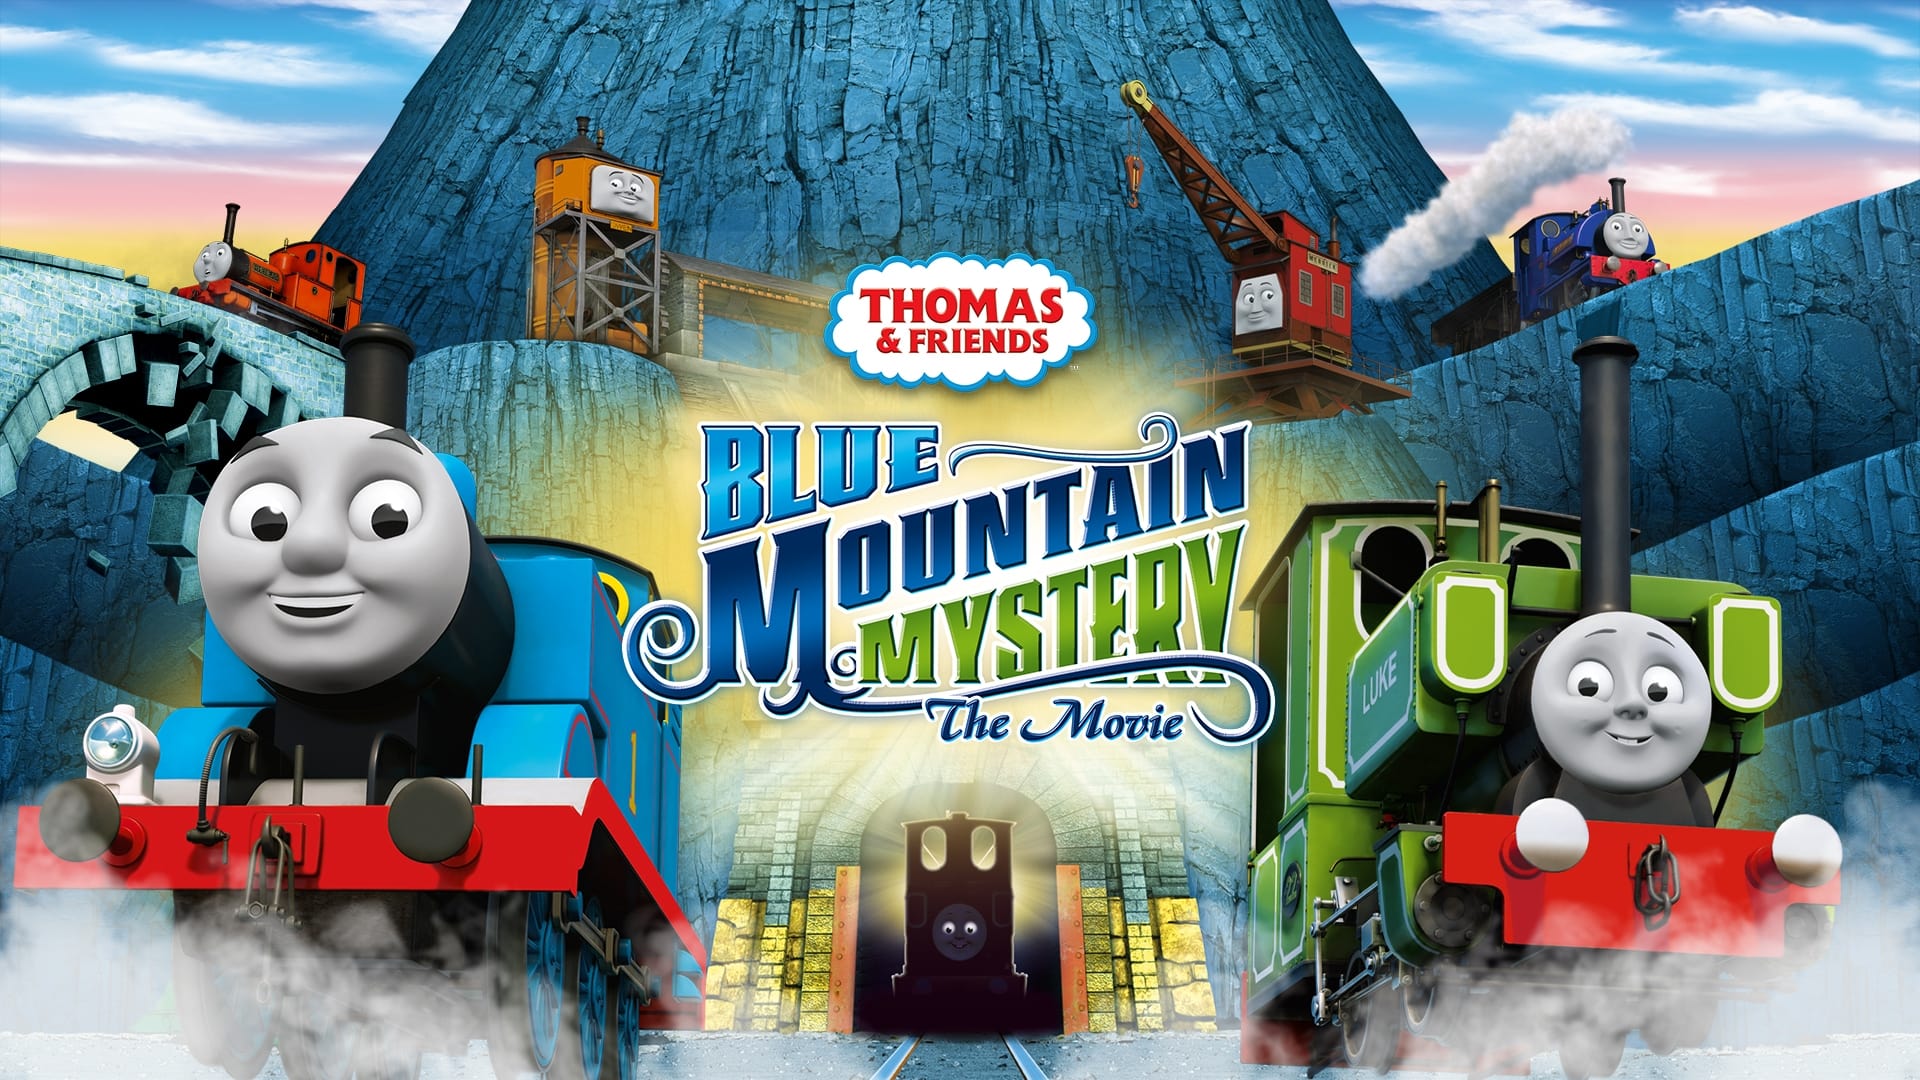 Thomas & Friends: Blue Mountain Mystery - The Movie (2012)